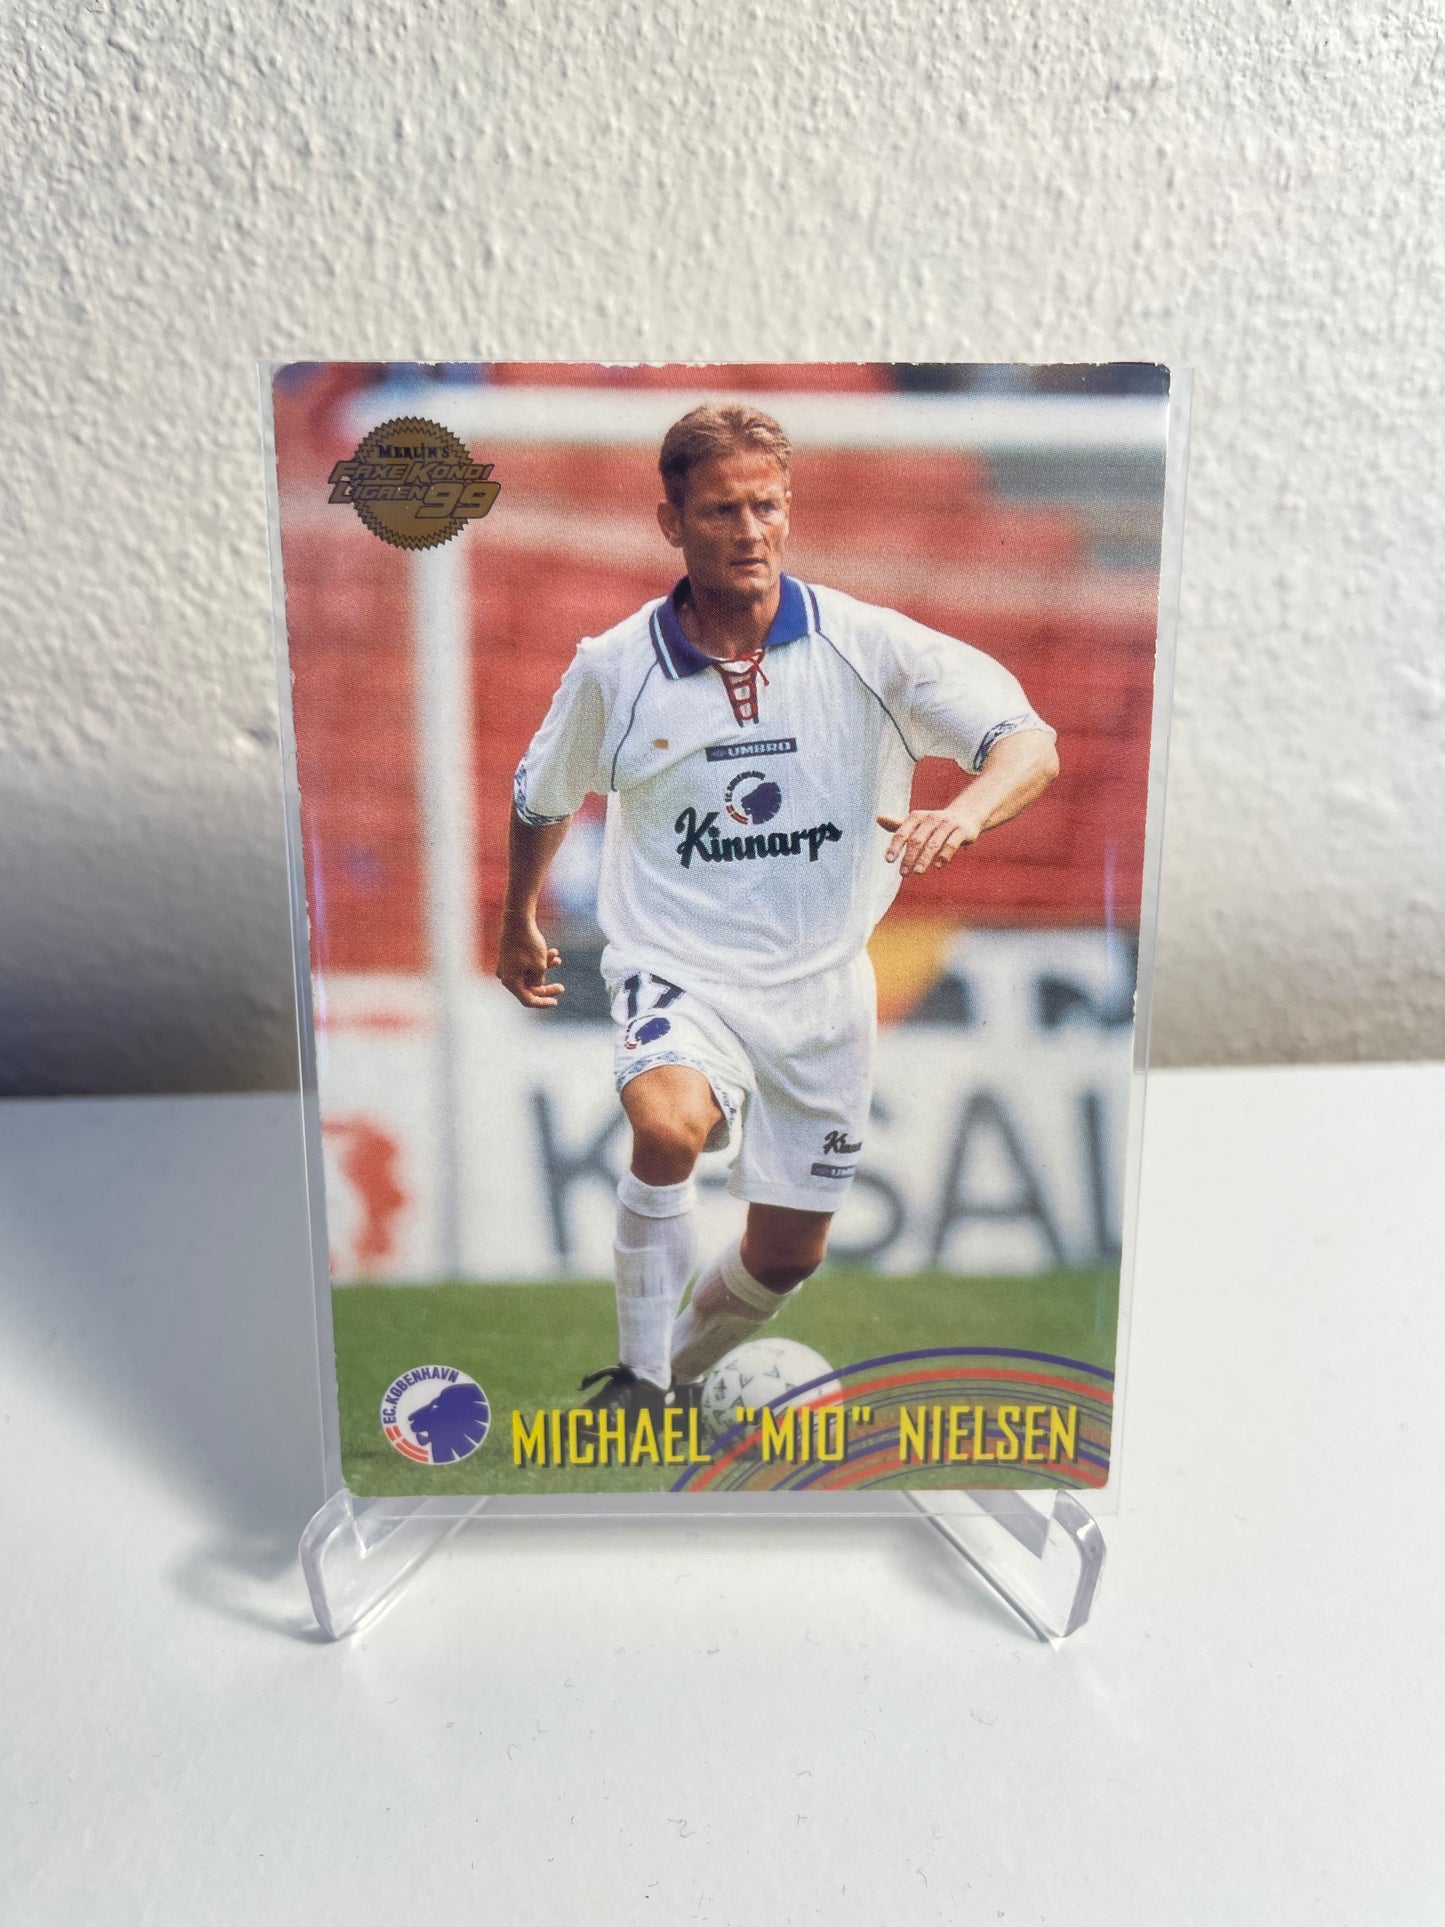 Merlins Faxe Kondi Ligaen 98/99 | Michael “Mio” Nielsen